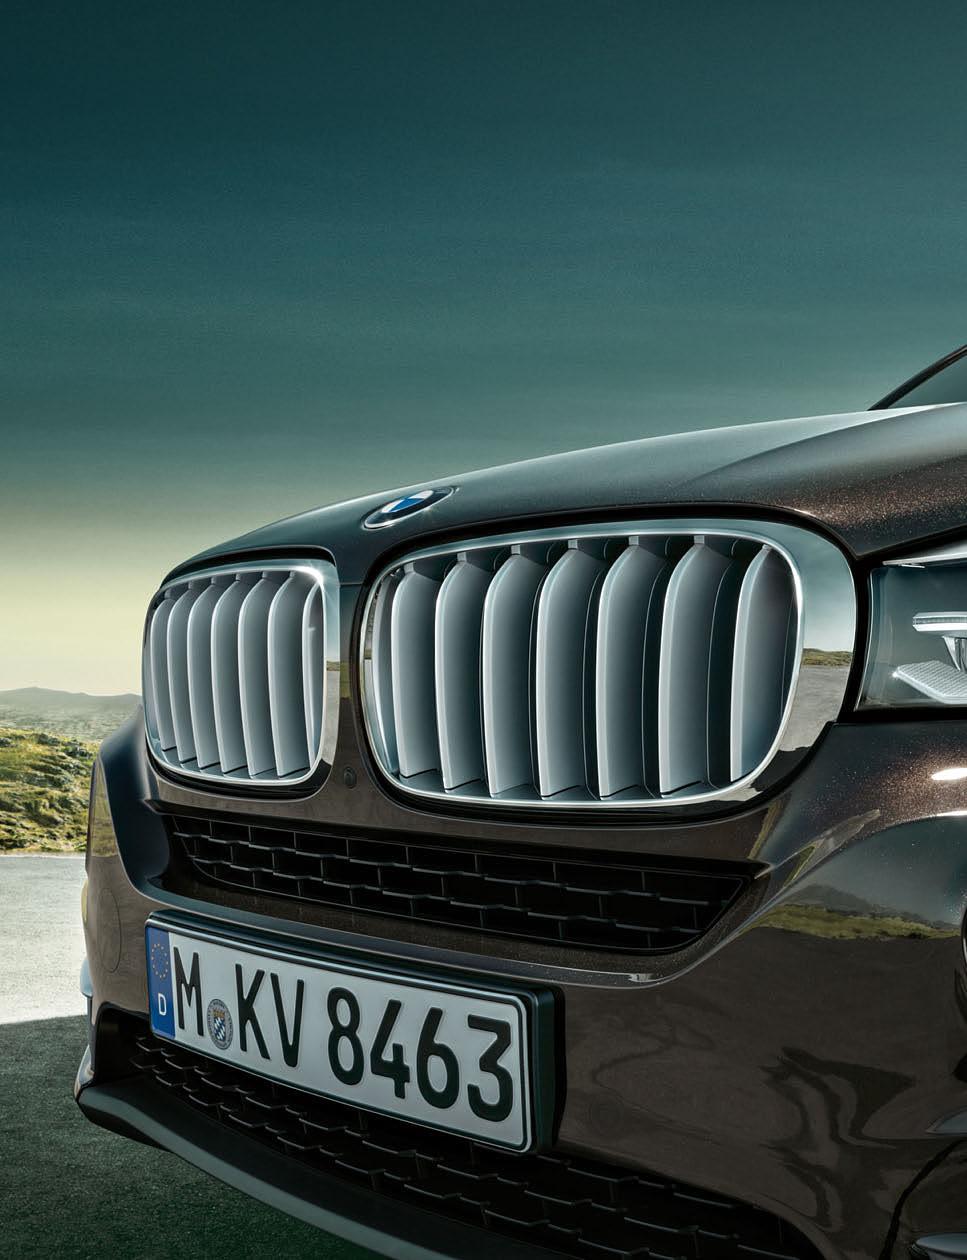 Suspension and Safety. 최상의다이내믹을위한서스펜션. 최적화된로드홀딩은진정한드라이빙의역동성을경험하기위한필수요건입니다. BMW X5 는 50:50 에가까운앞 / 뒤차축간무게배분, 중립적인조향특성, 높은수준의방향안정성, 그리고인텔리전트 xdrive 